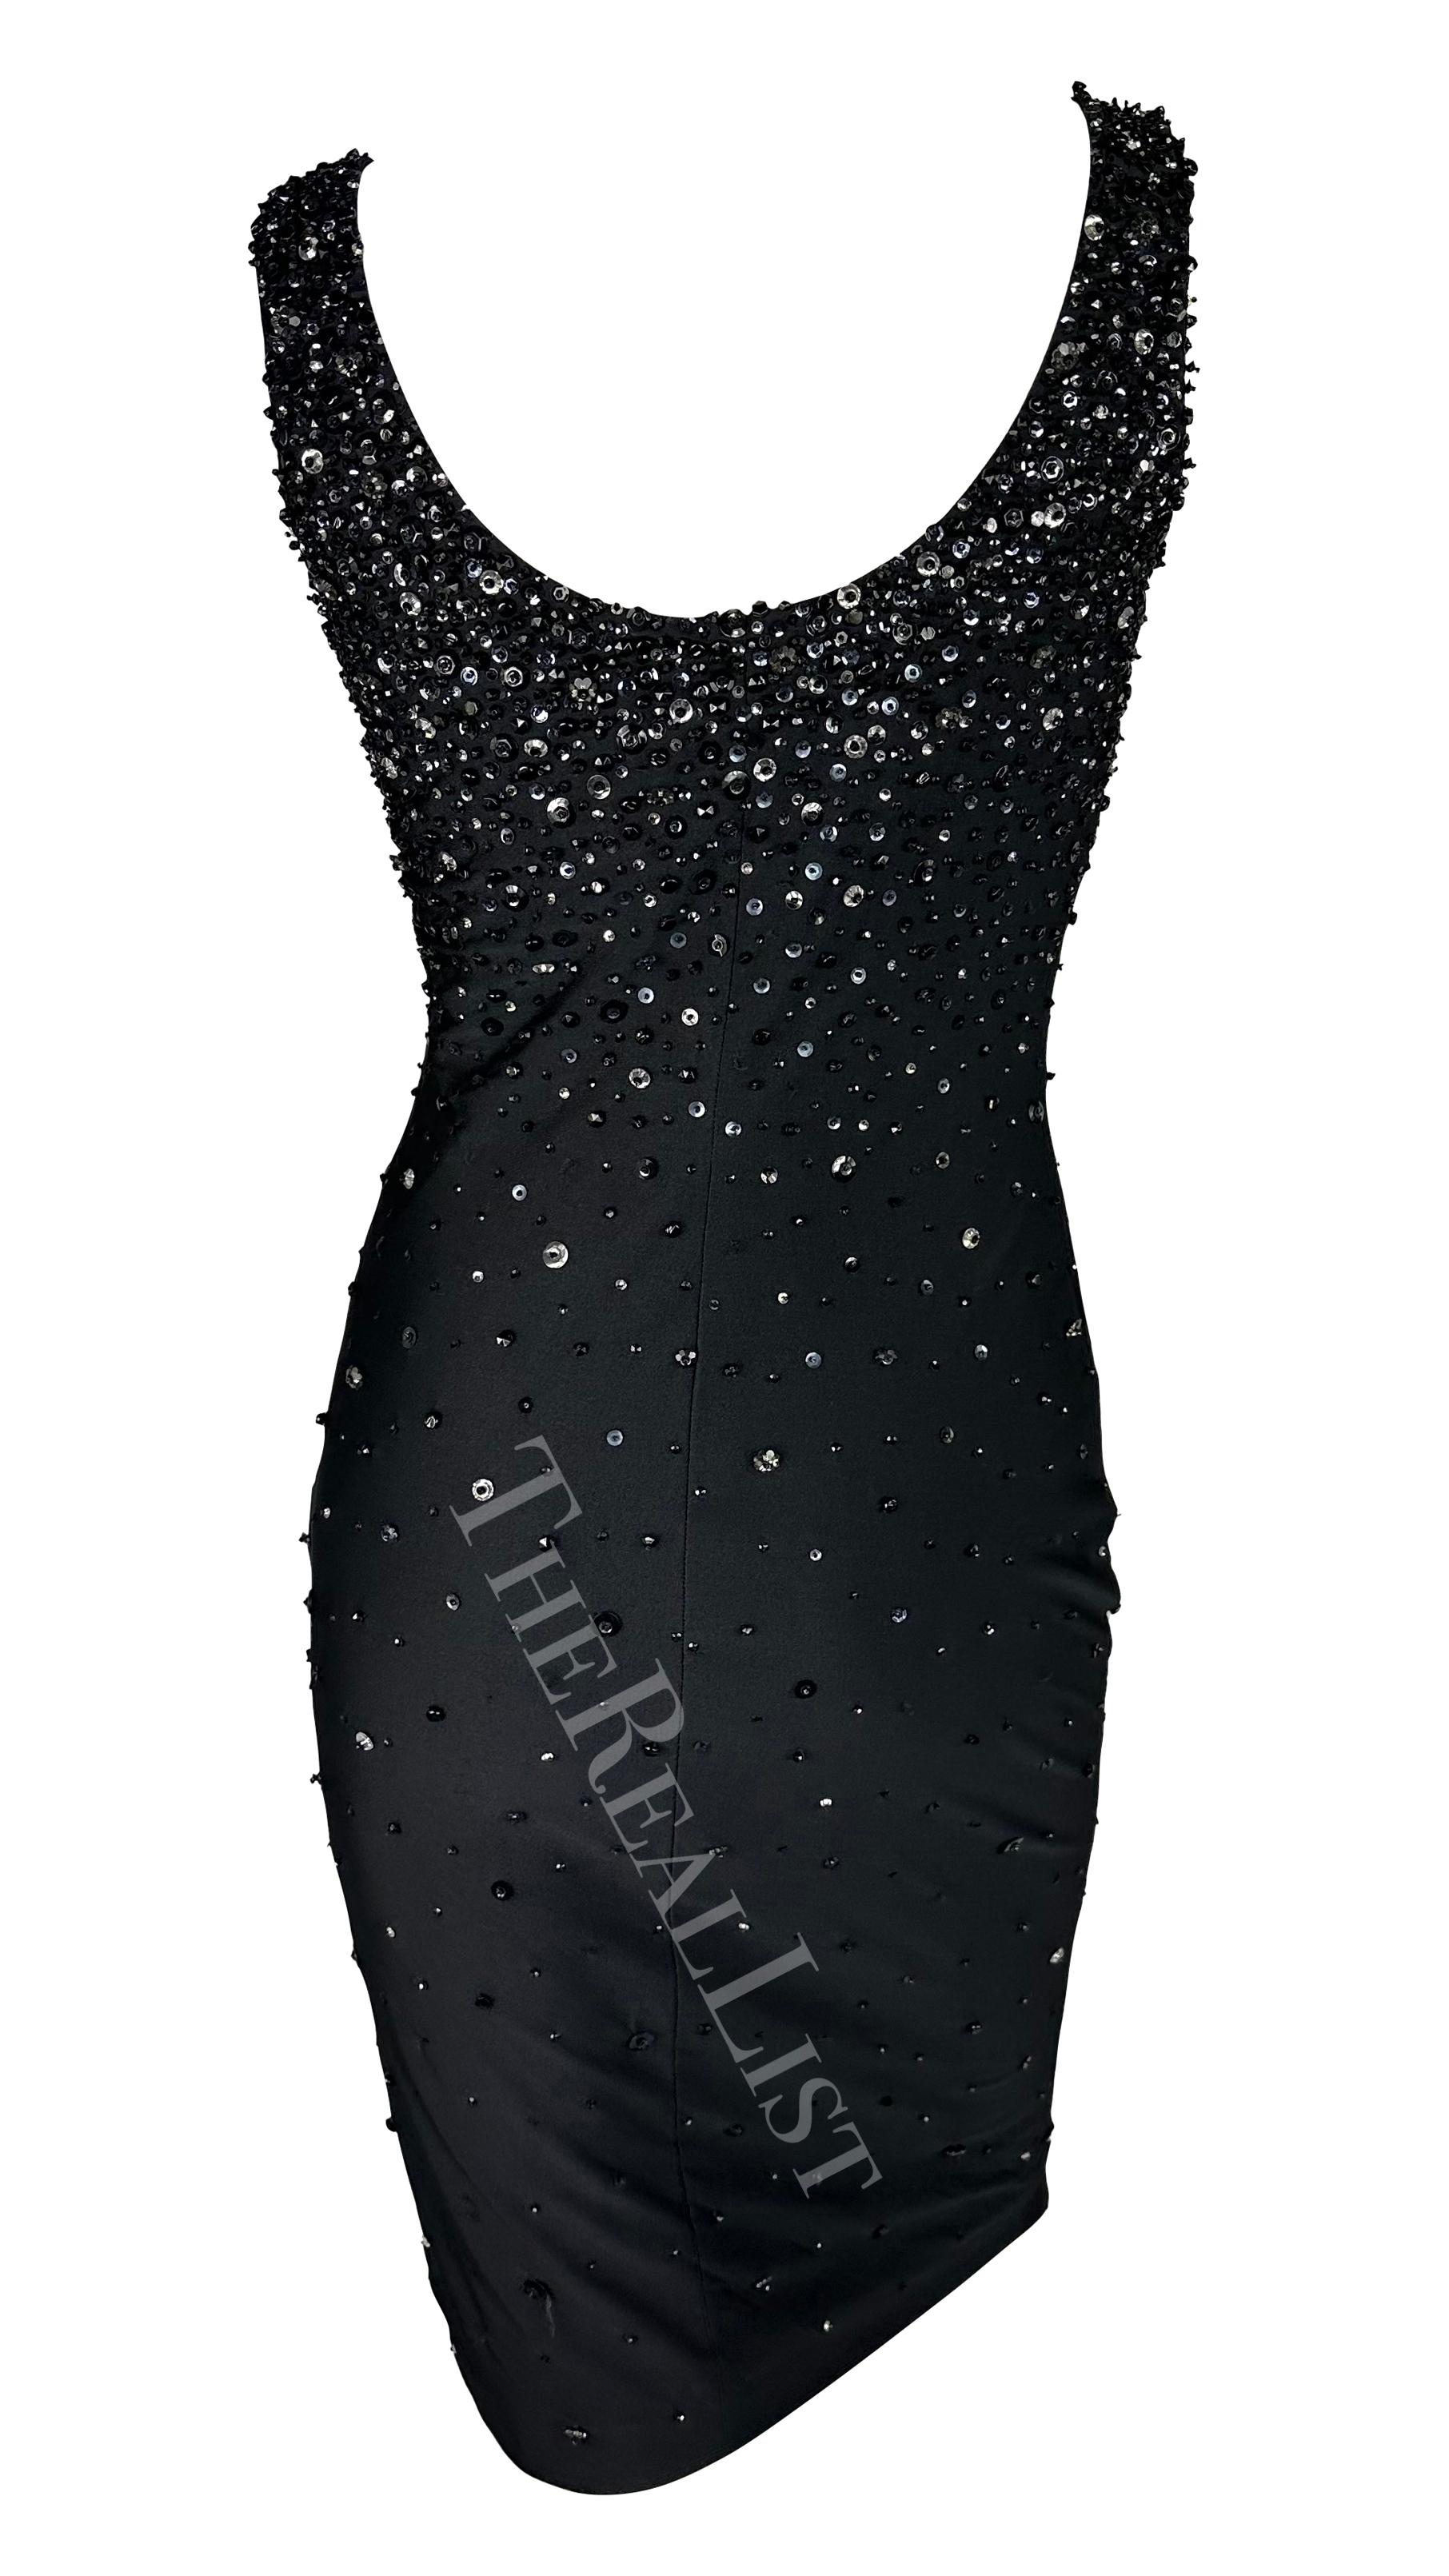 S/S 1996 Gianni Versace Black Beaded Sleeveless Bodycon Runway Dress For Sale 4